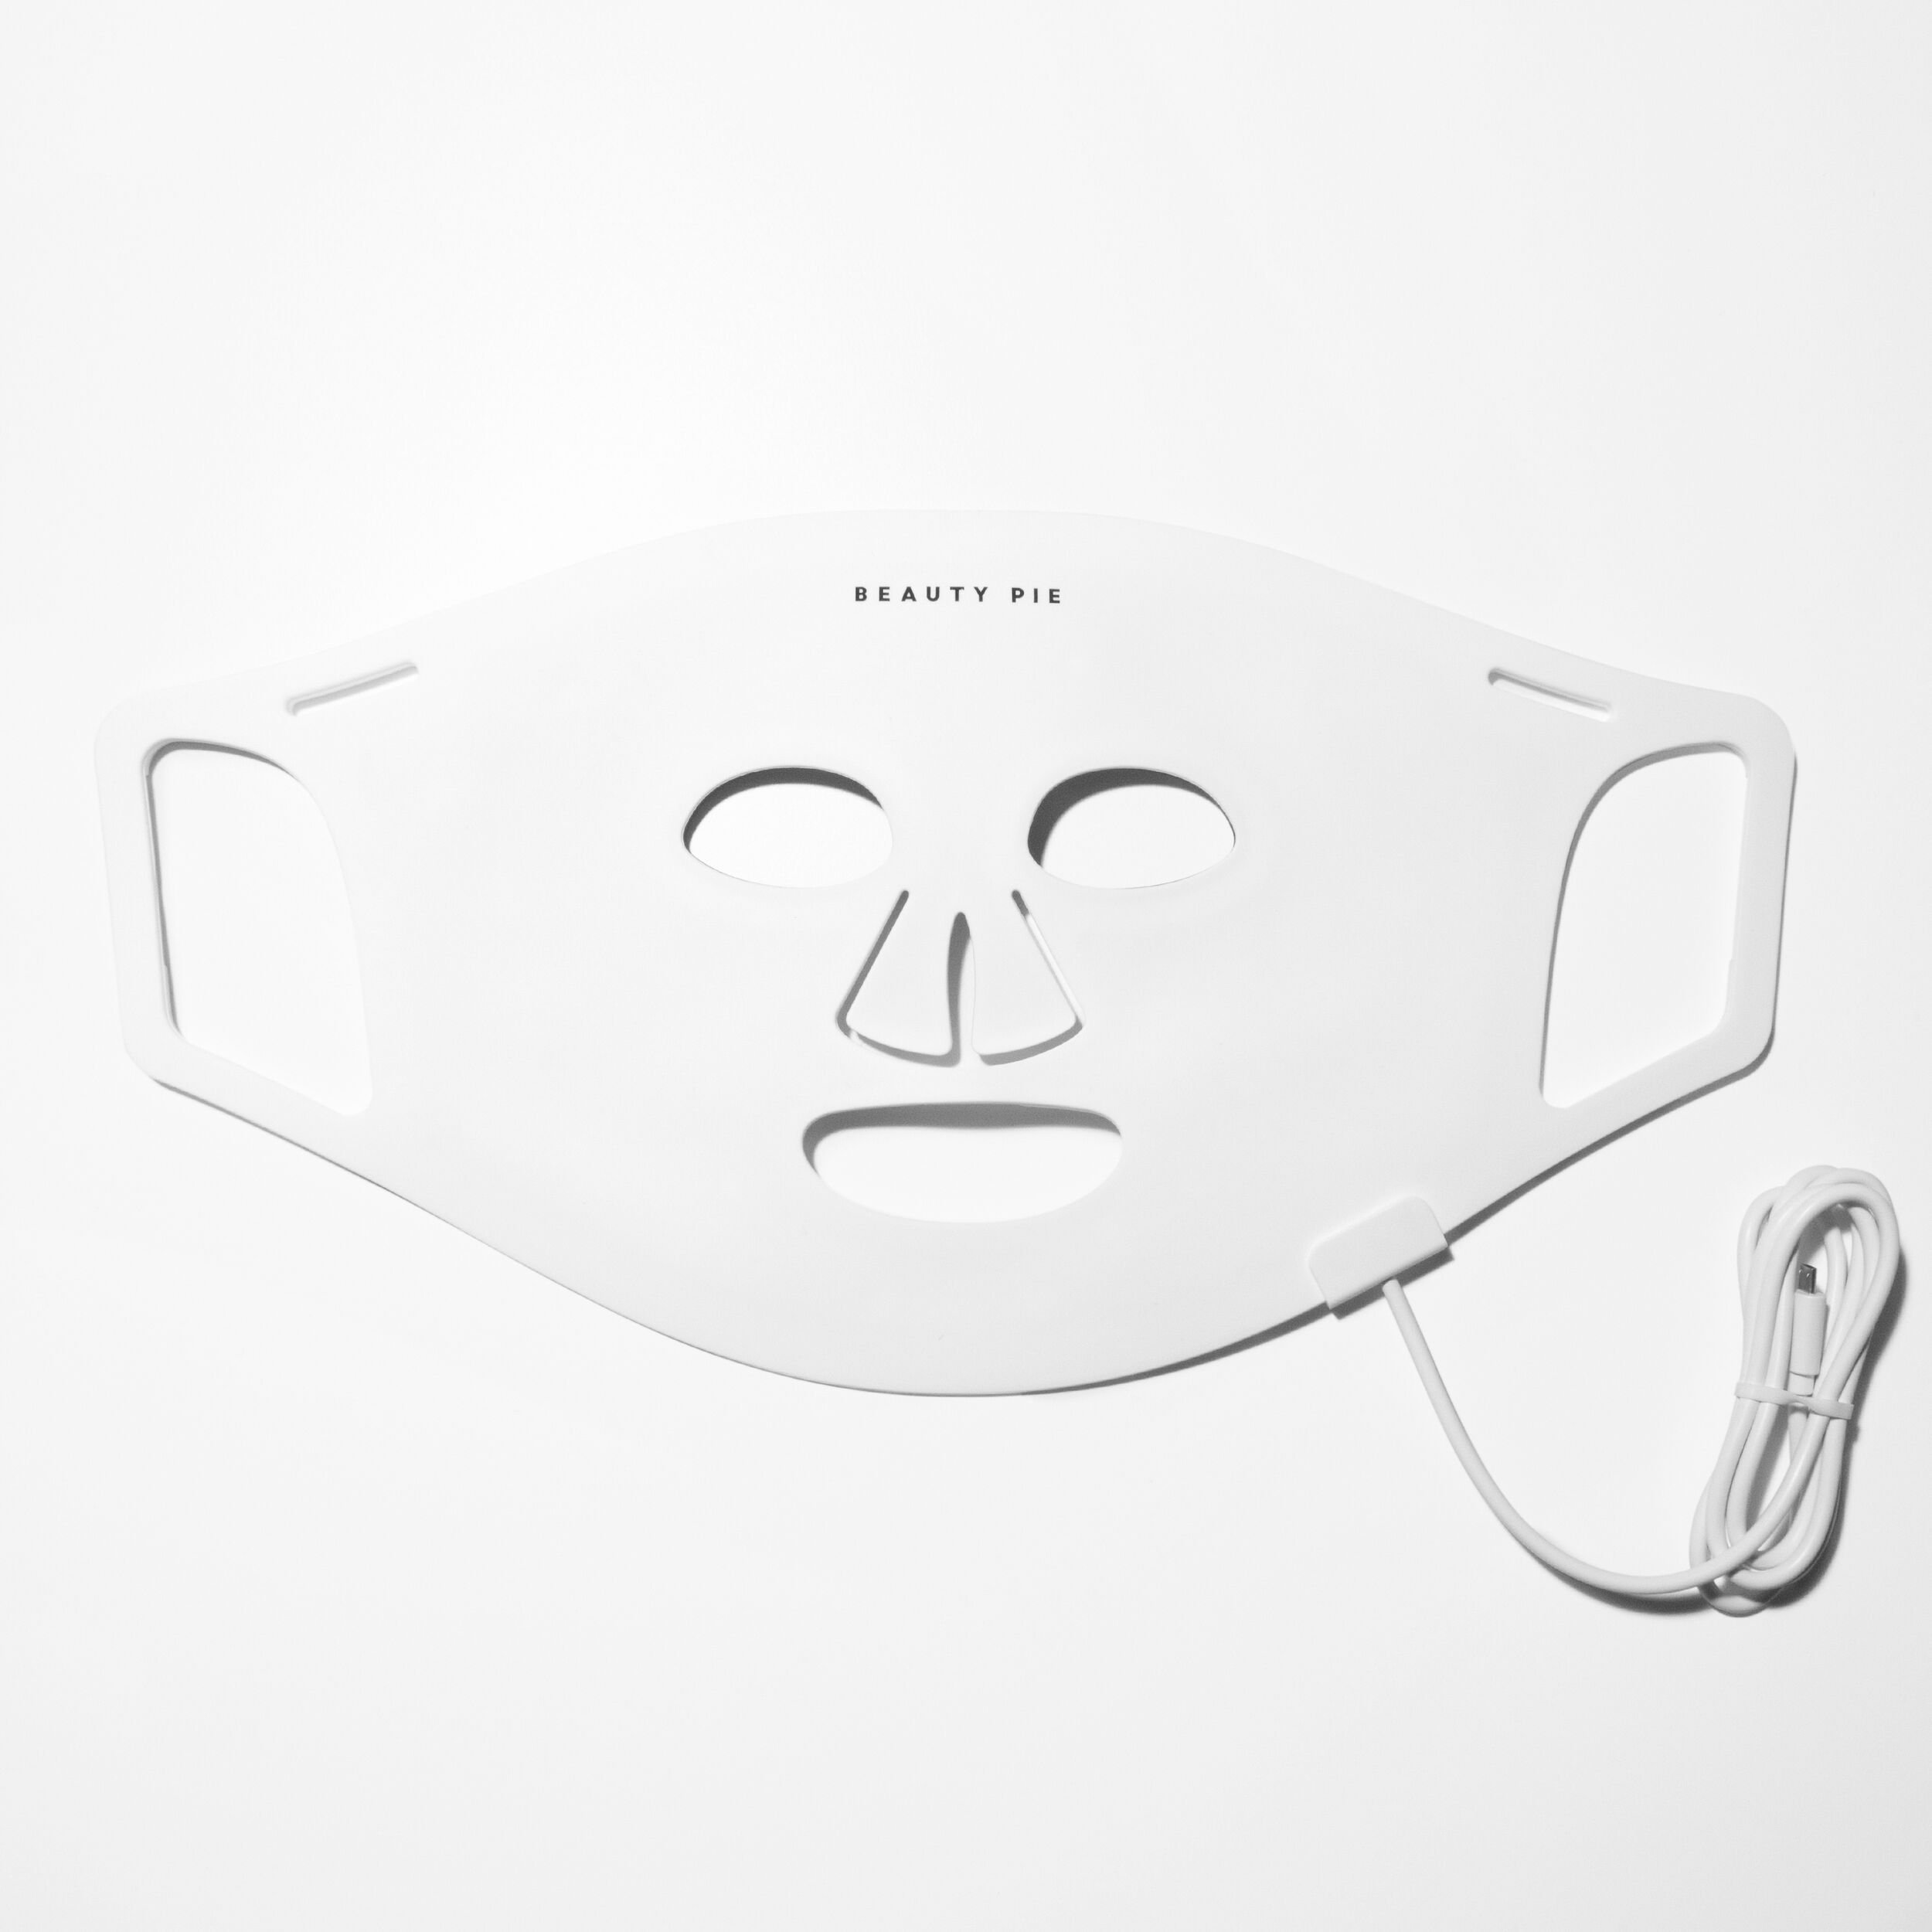 C-Wave Light FacialRed / Infrared / Dual Light LED Treatment Mask | Beauty Pie (UK)